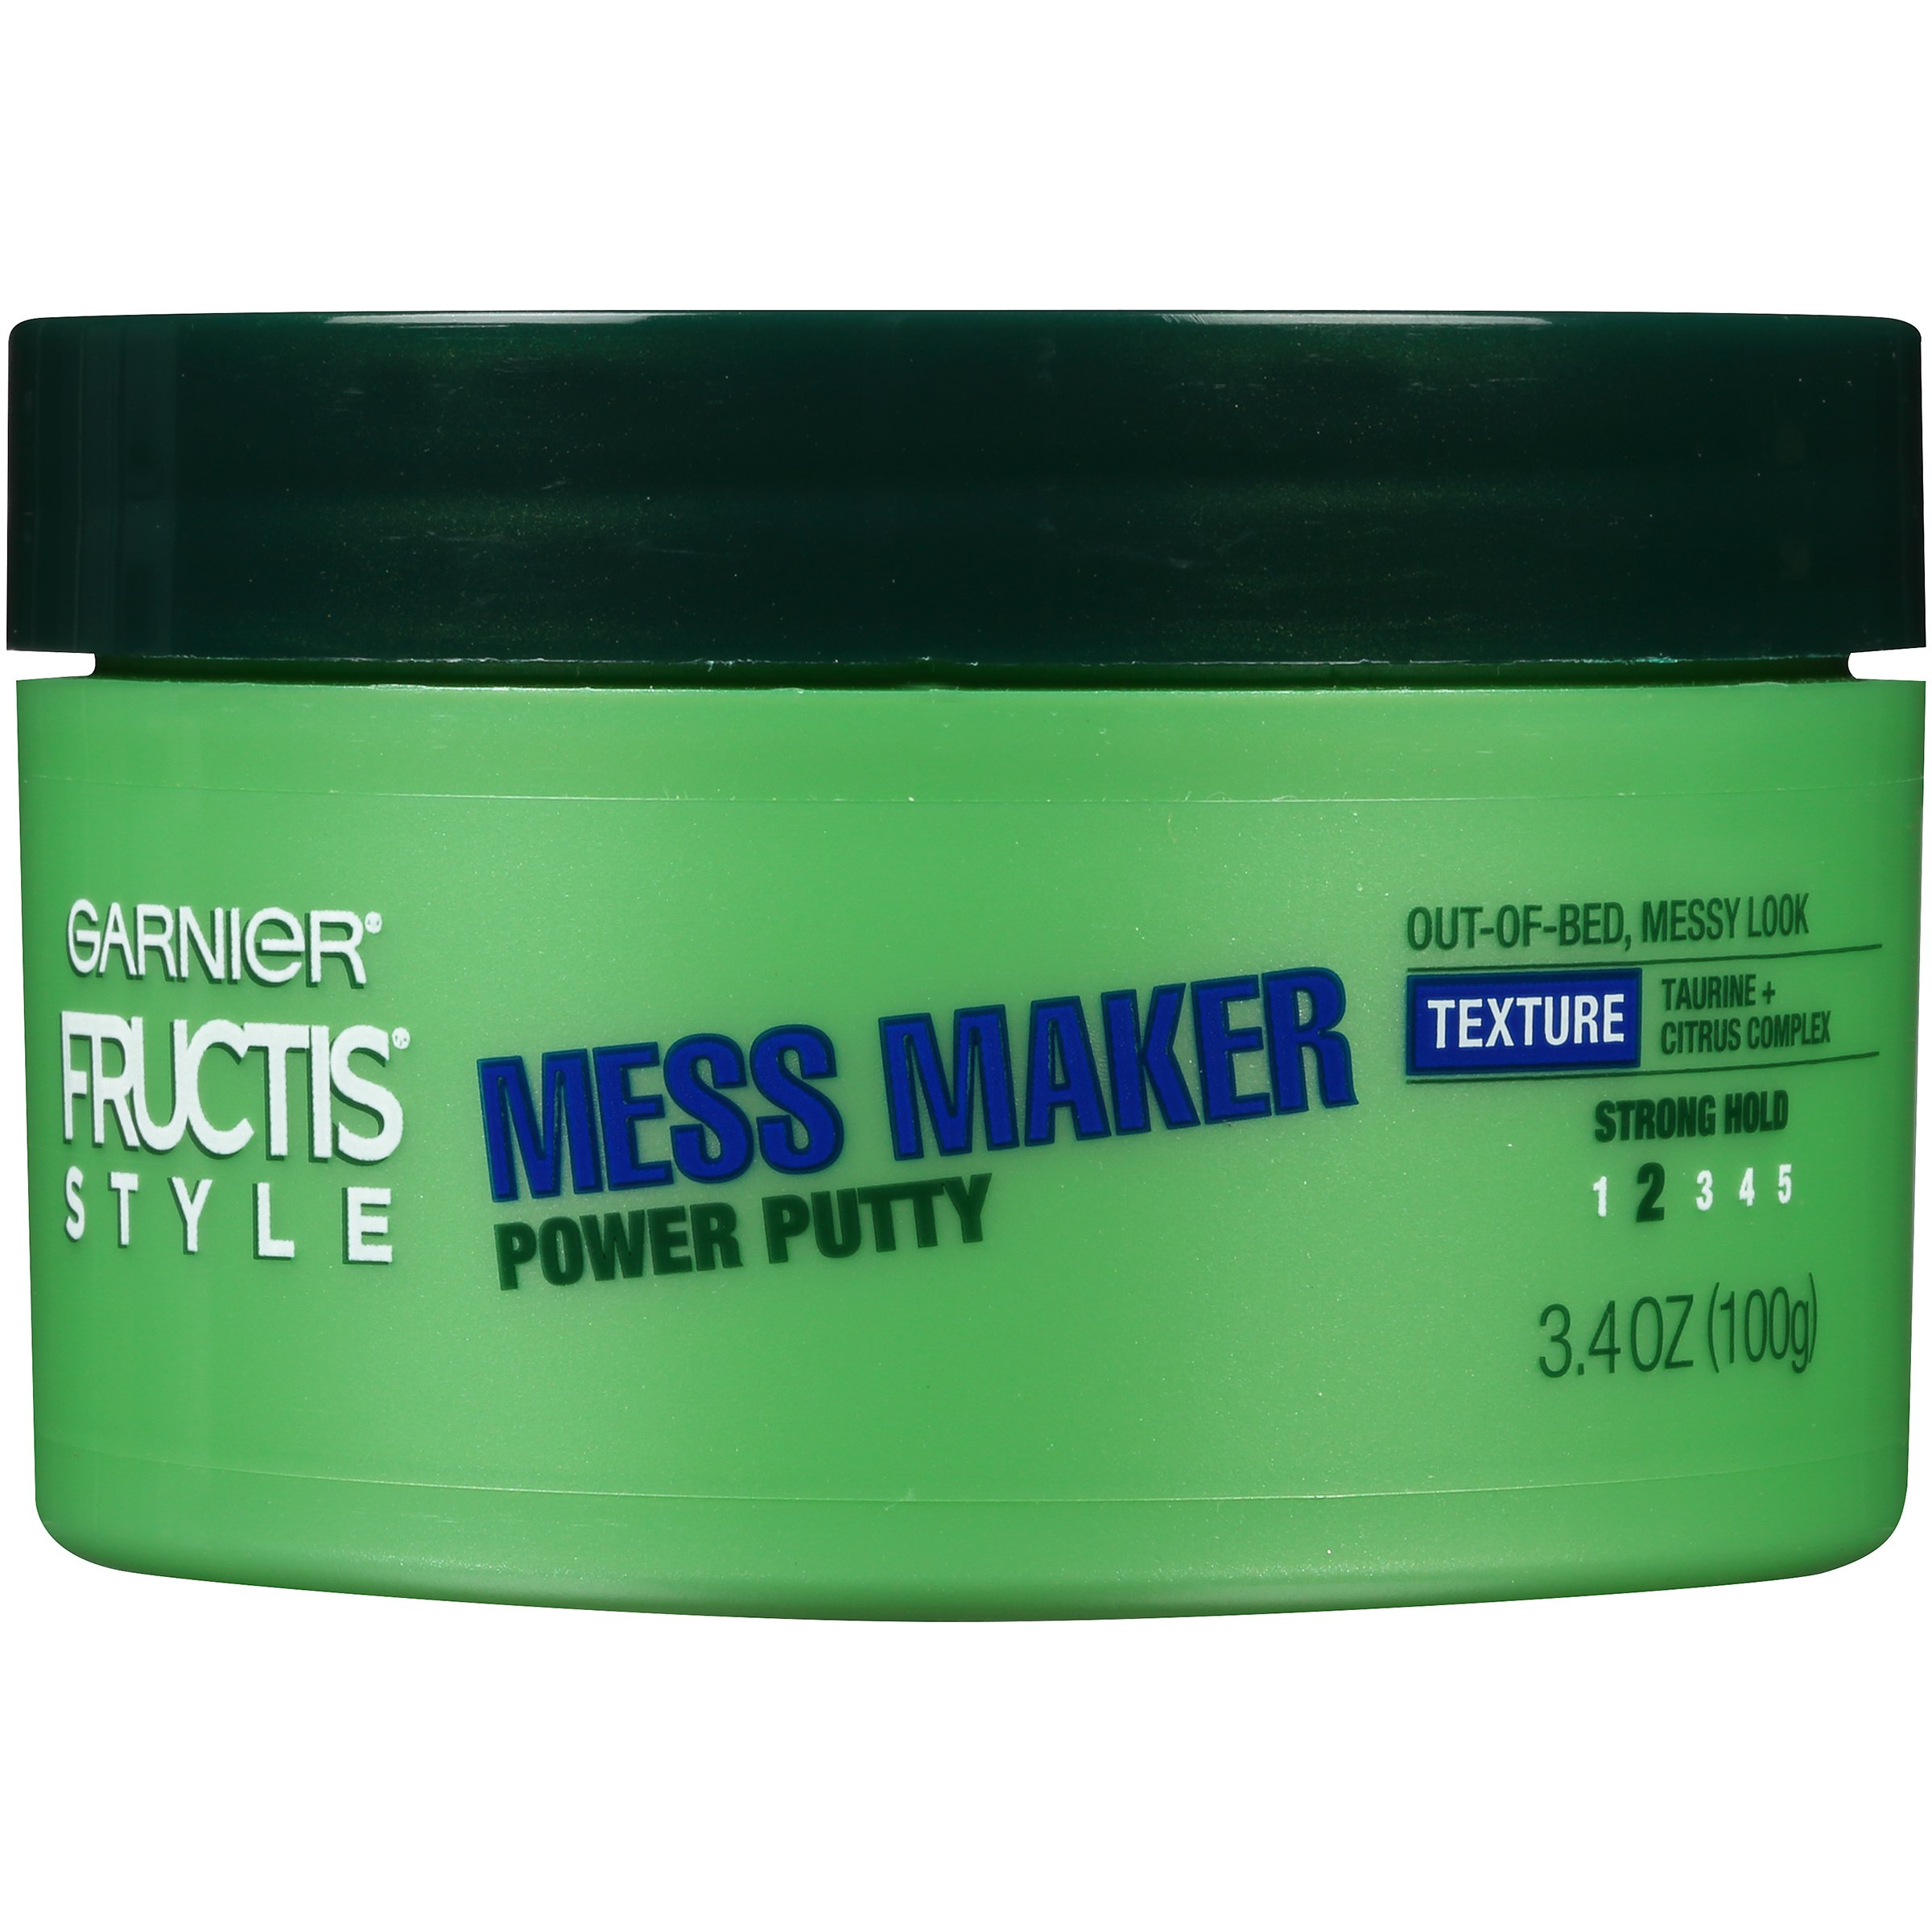 Garnier Fructis Style Mess Maker Power Putty For Men - Shop Hair Care at  H-E-B